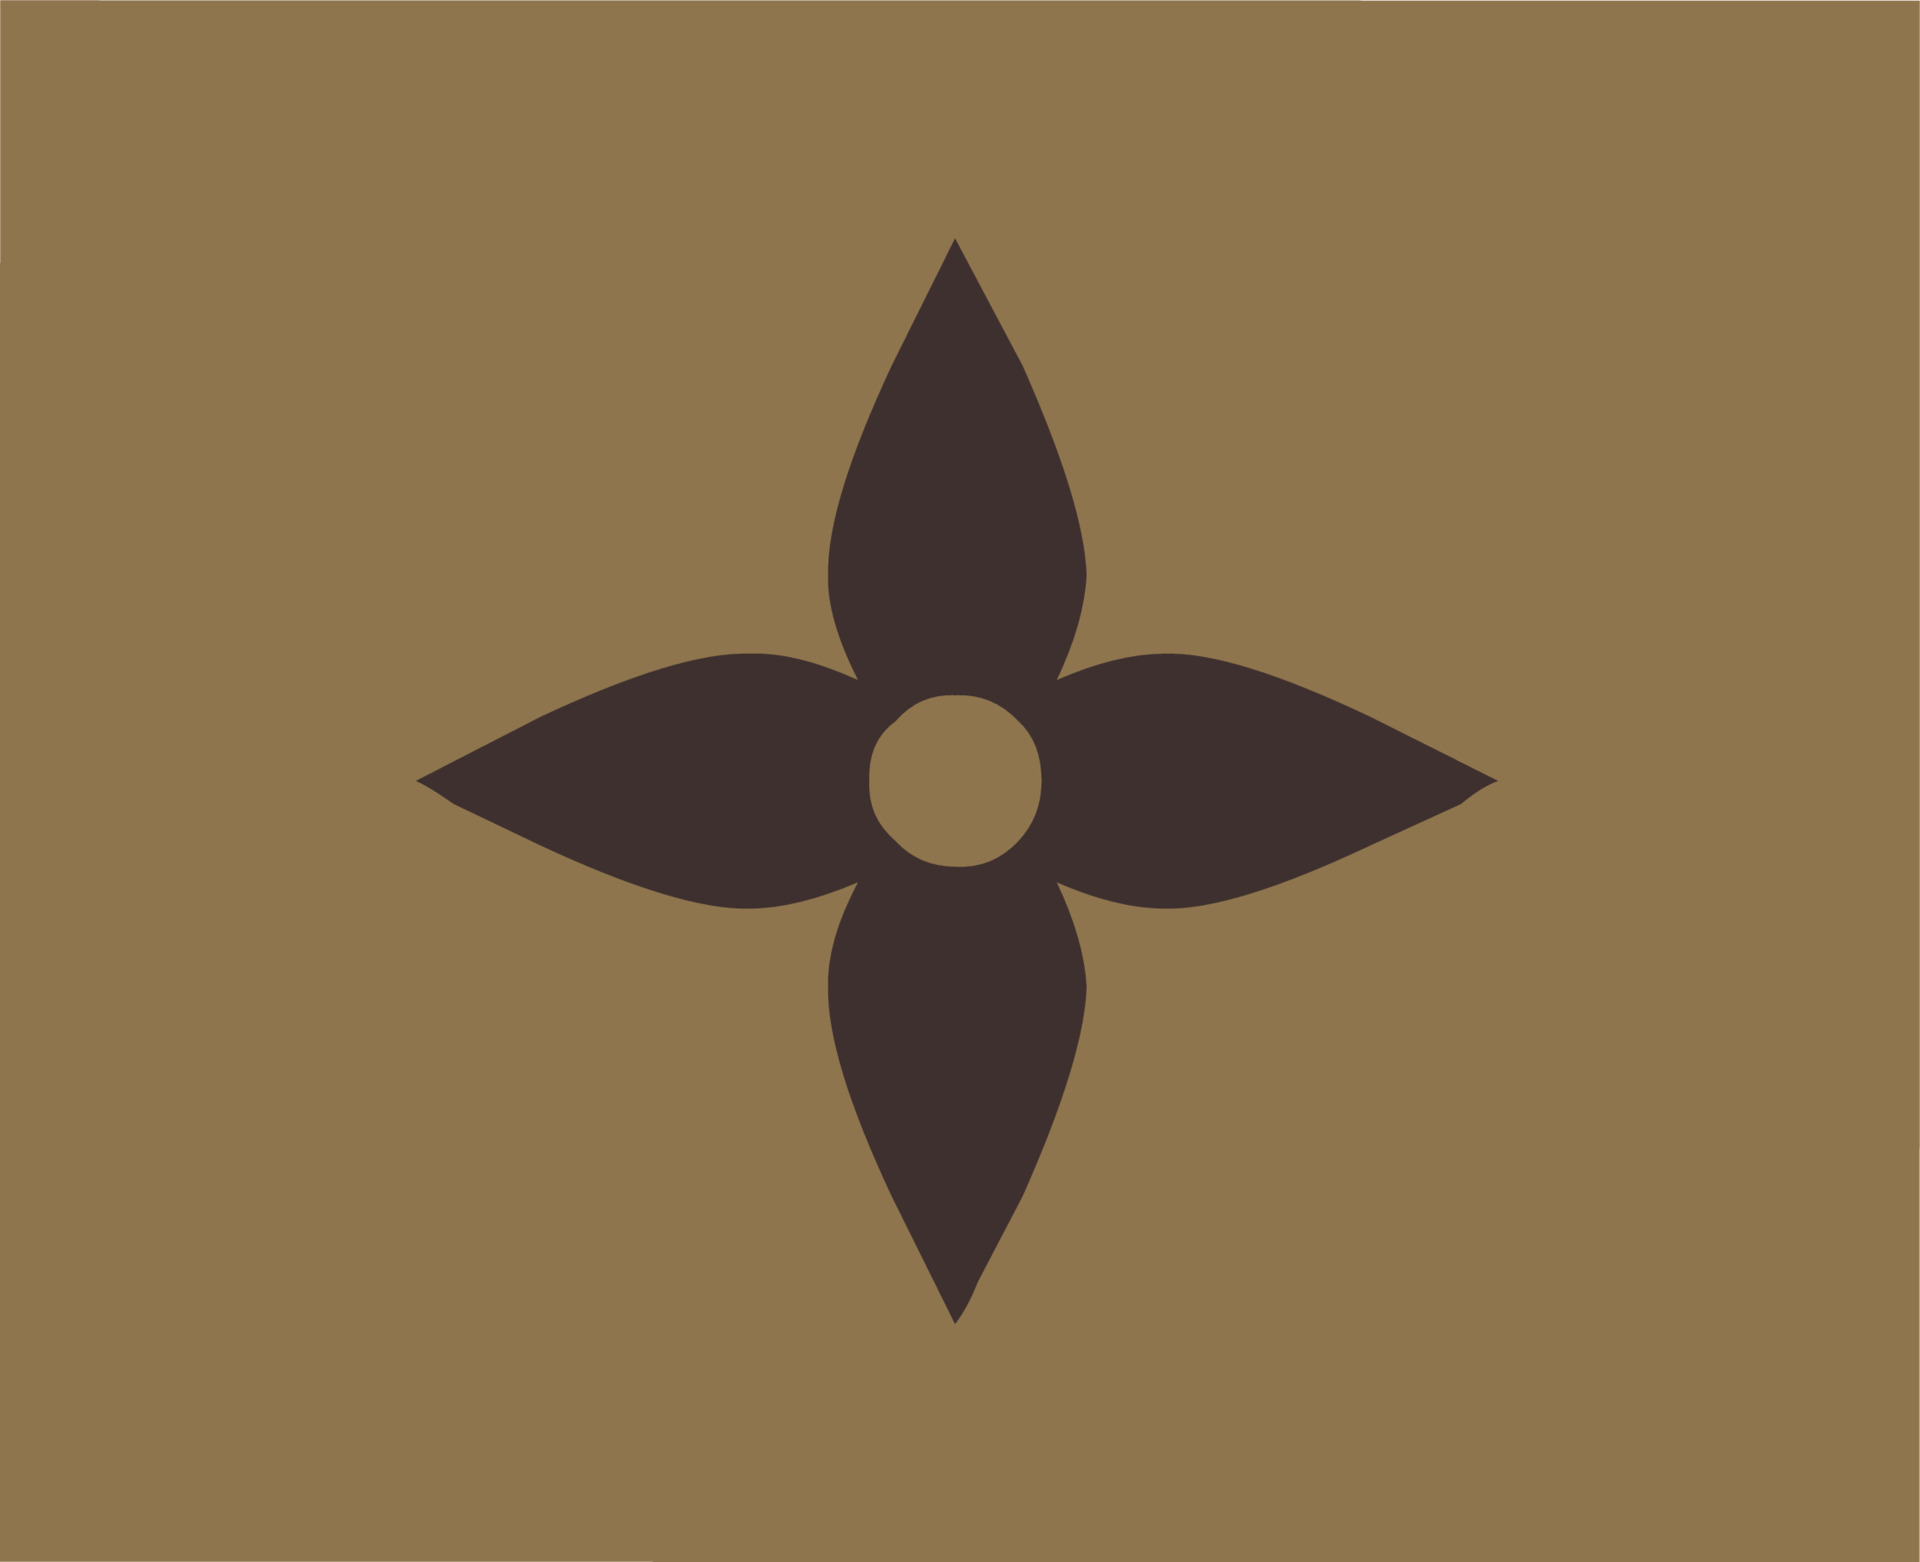 Louis Vuitton Logo Brand Fashion Brown Design Symbol Clothes